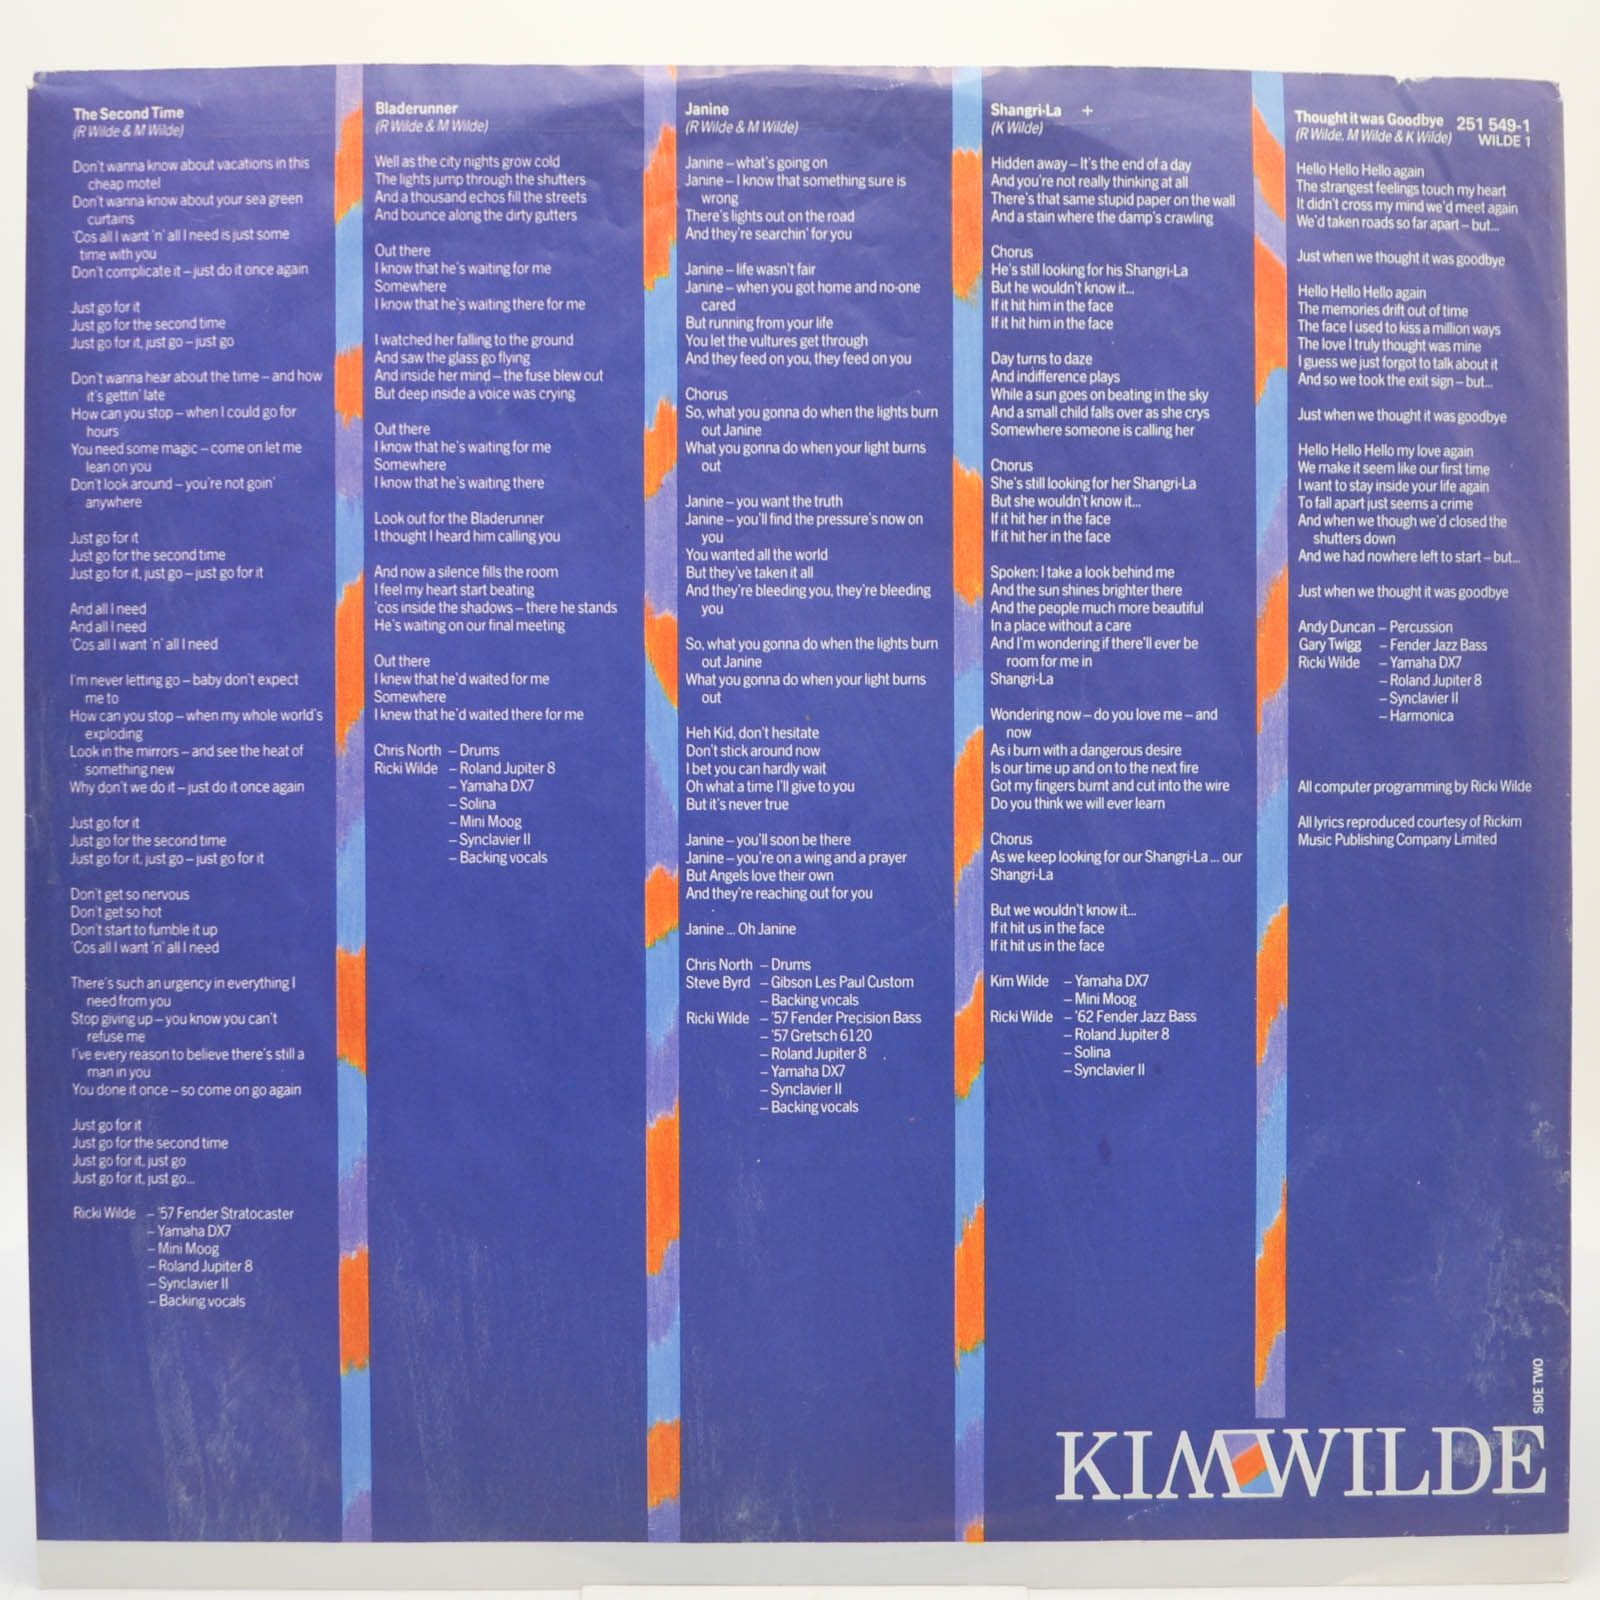 Kim Wilde — Teases & Dares, 1984